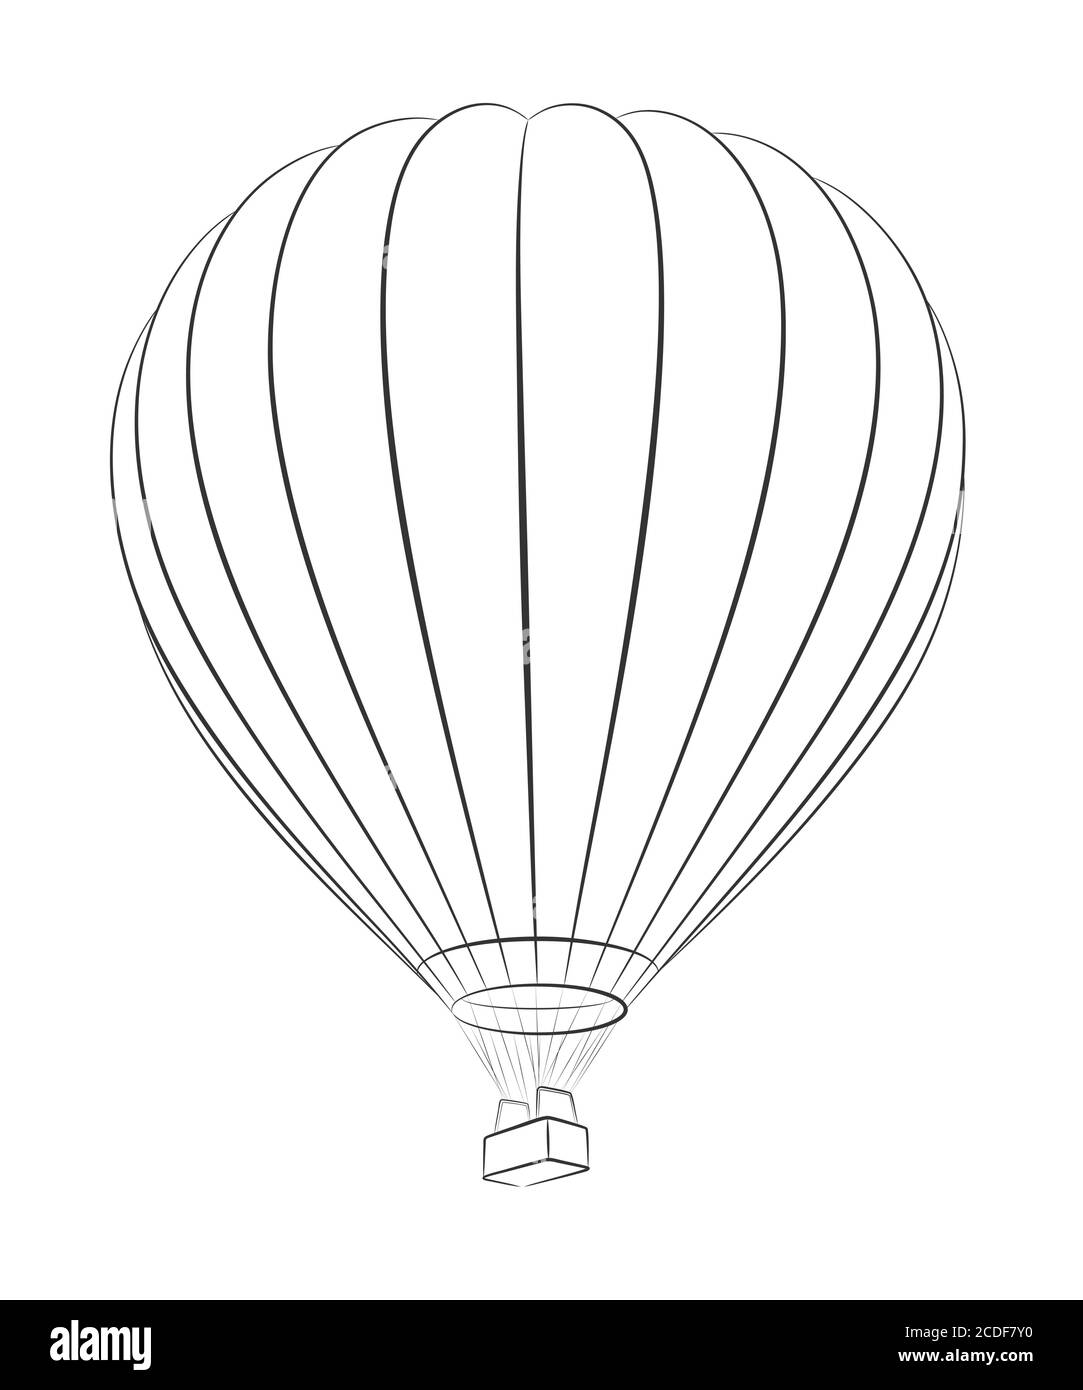 10300 Hot Air Balloon Drawing Illustrations RoyaltyFree Vector Graphics   Clip Art  iStock  Hot air balloon illustration